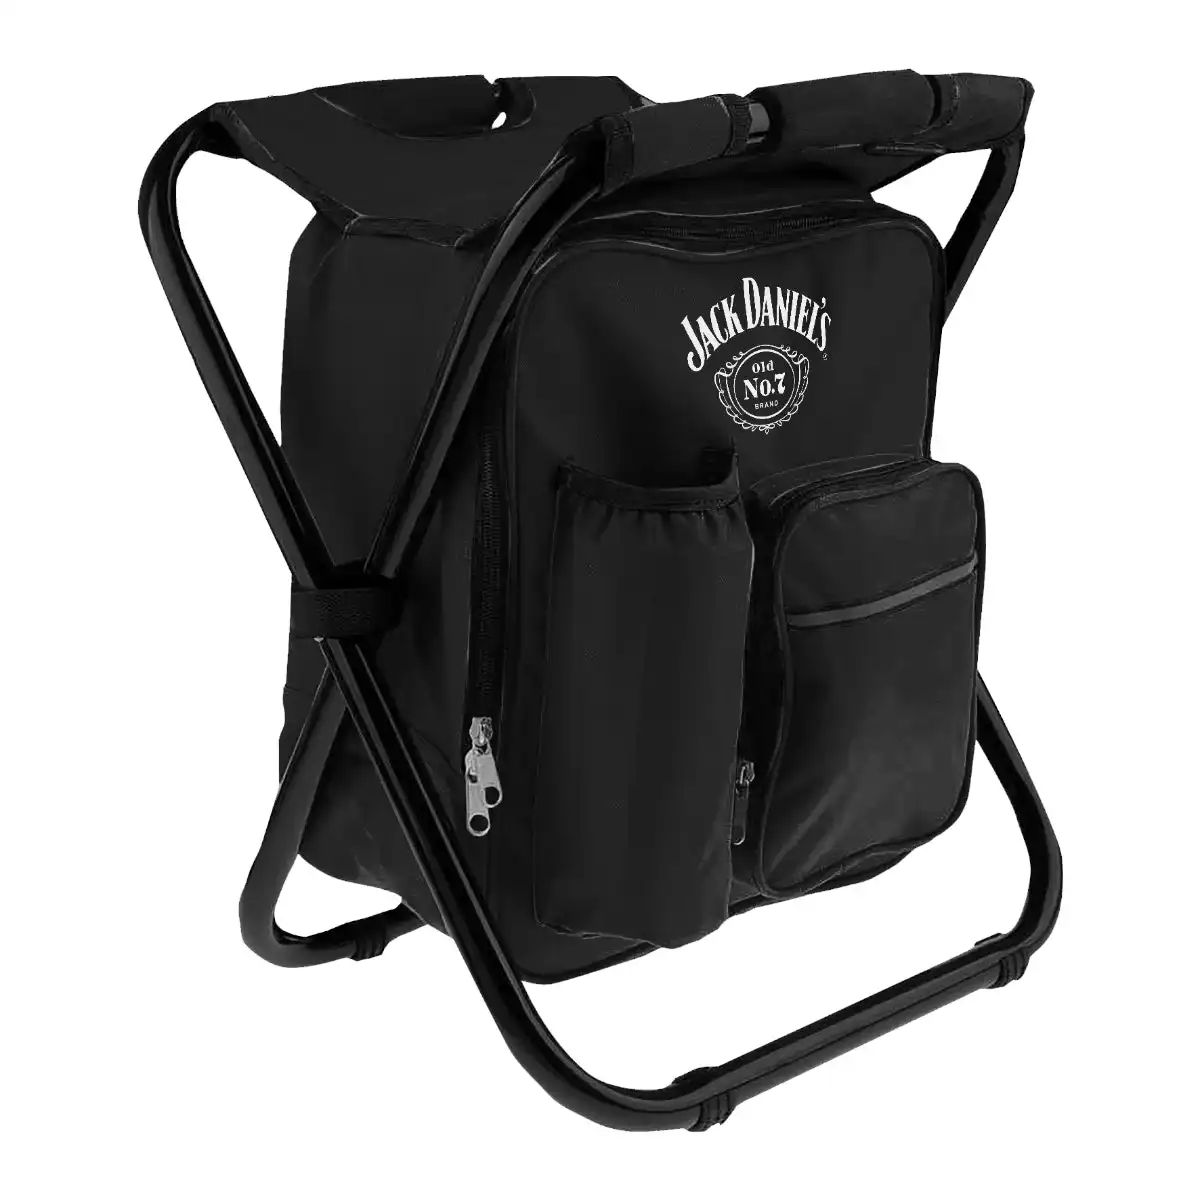 Jack Daniels Stool With Cooler Bag